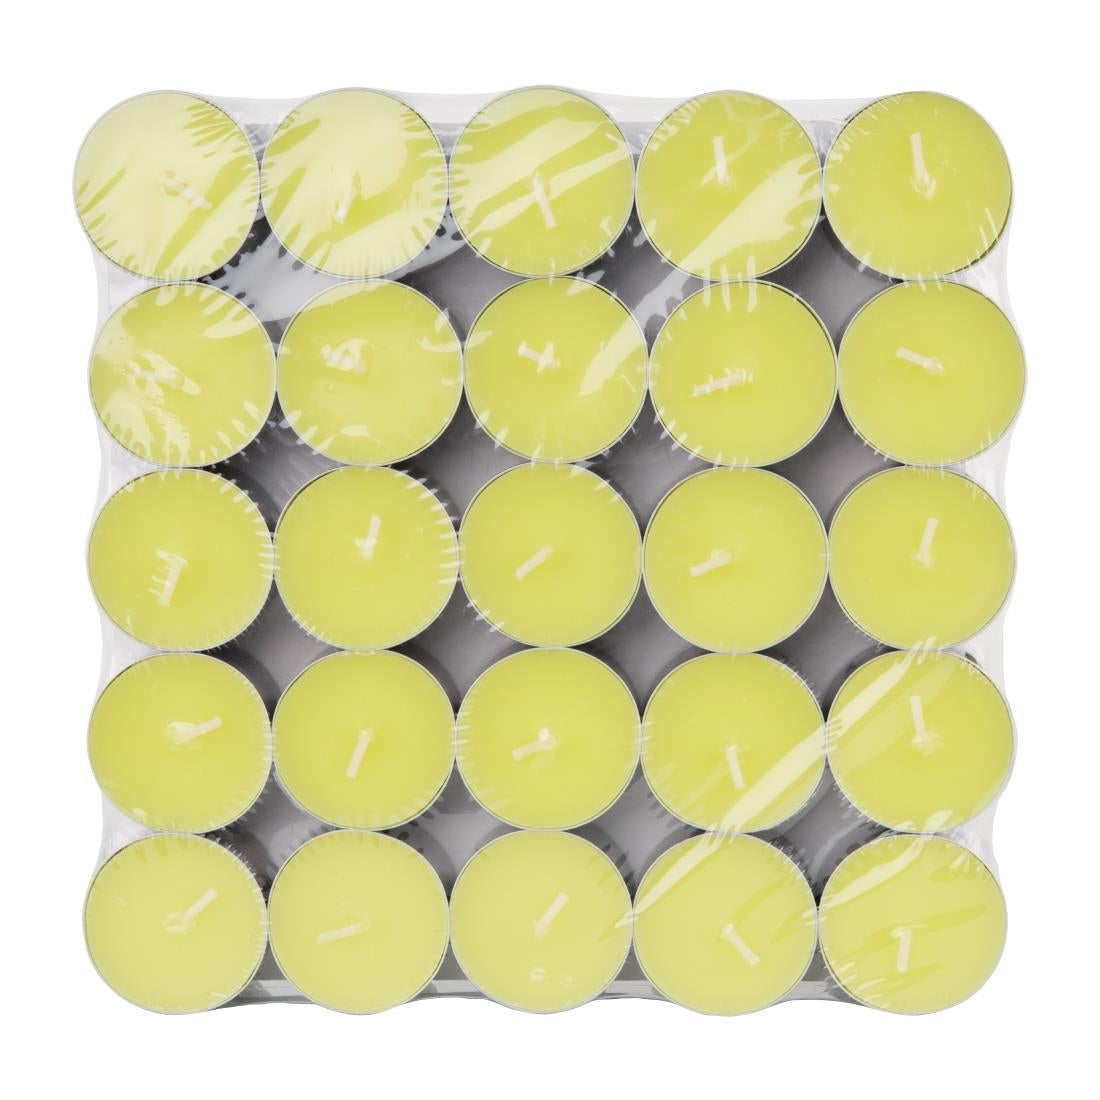 DG211 Eazyzap Citronella Tea Lights (Pack of 50) JD Catering Equipment Solutions Ltd